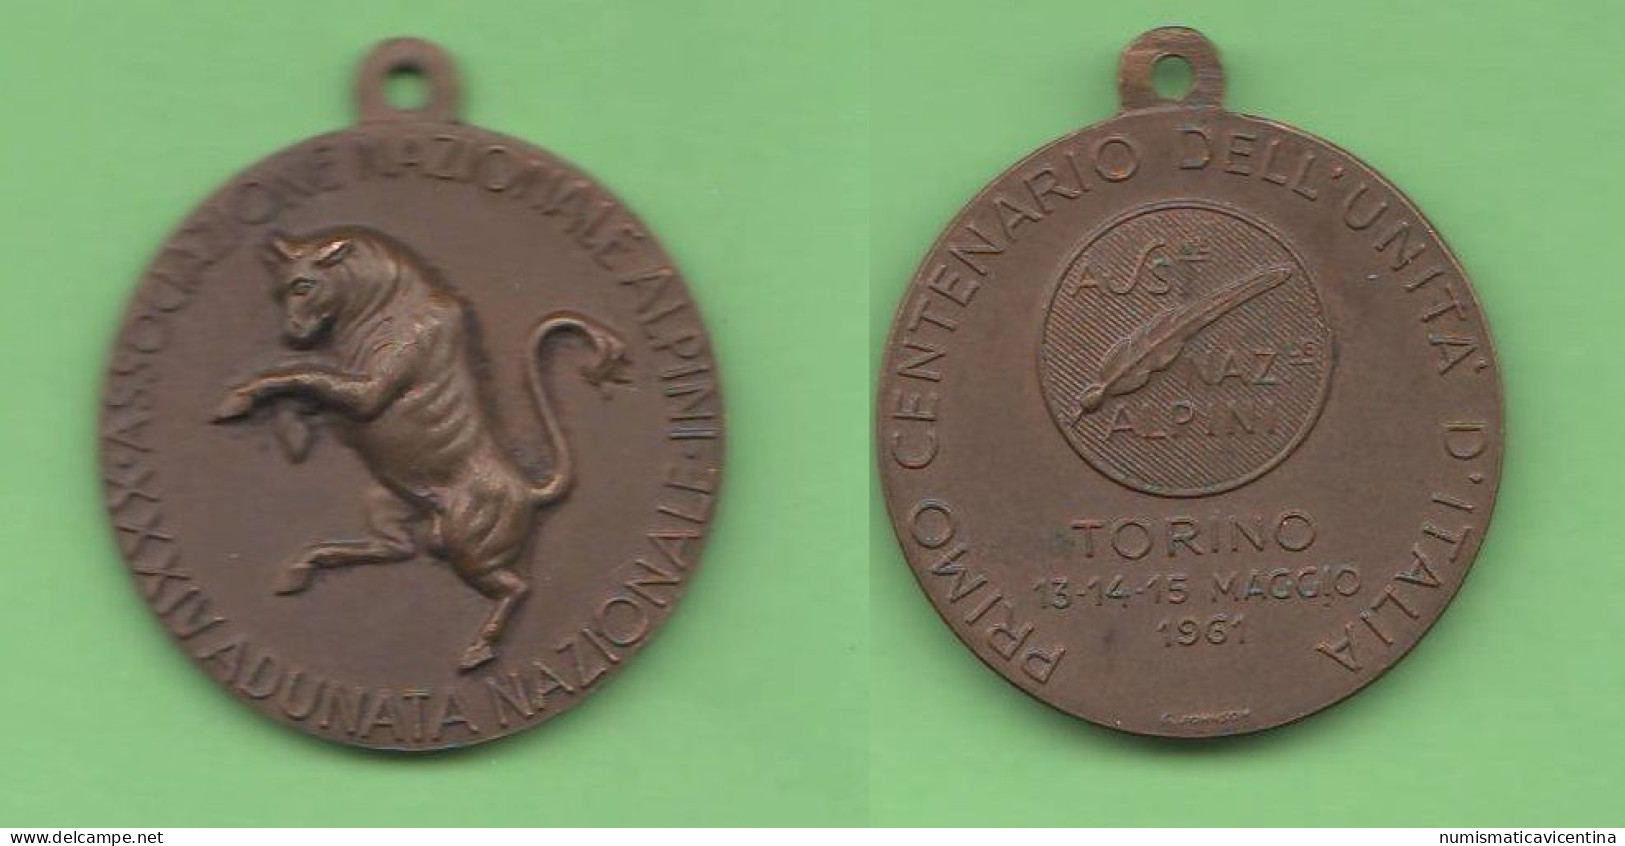 Torino Medaglia Adunata Nazionale Alpini 1961 ANA Marcata Johnson - Italie